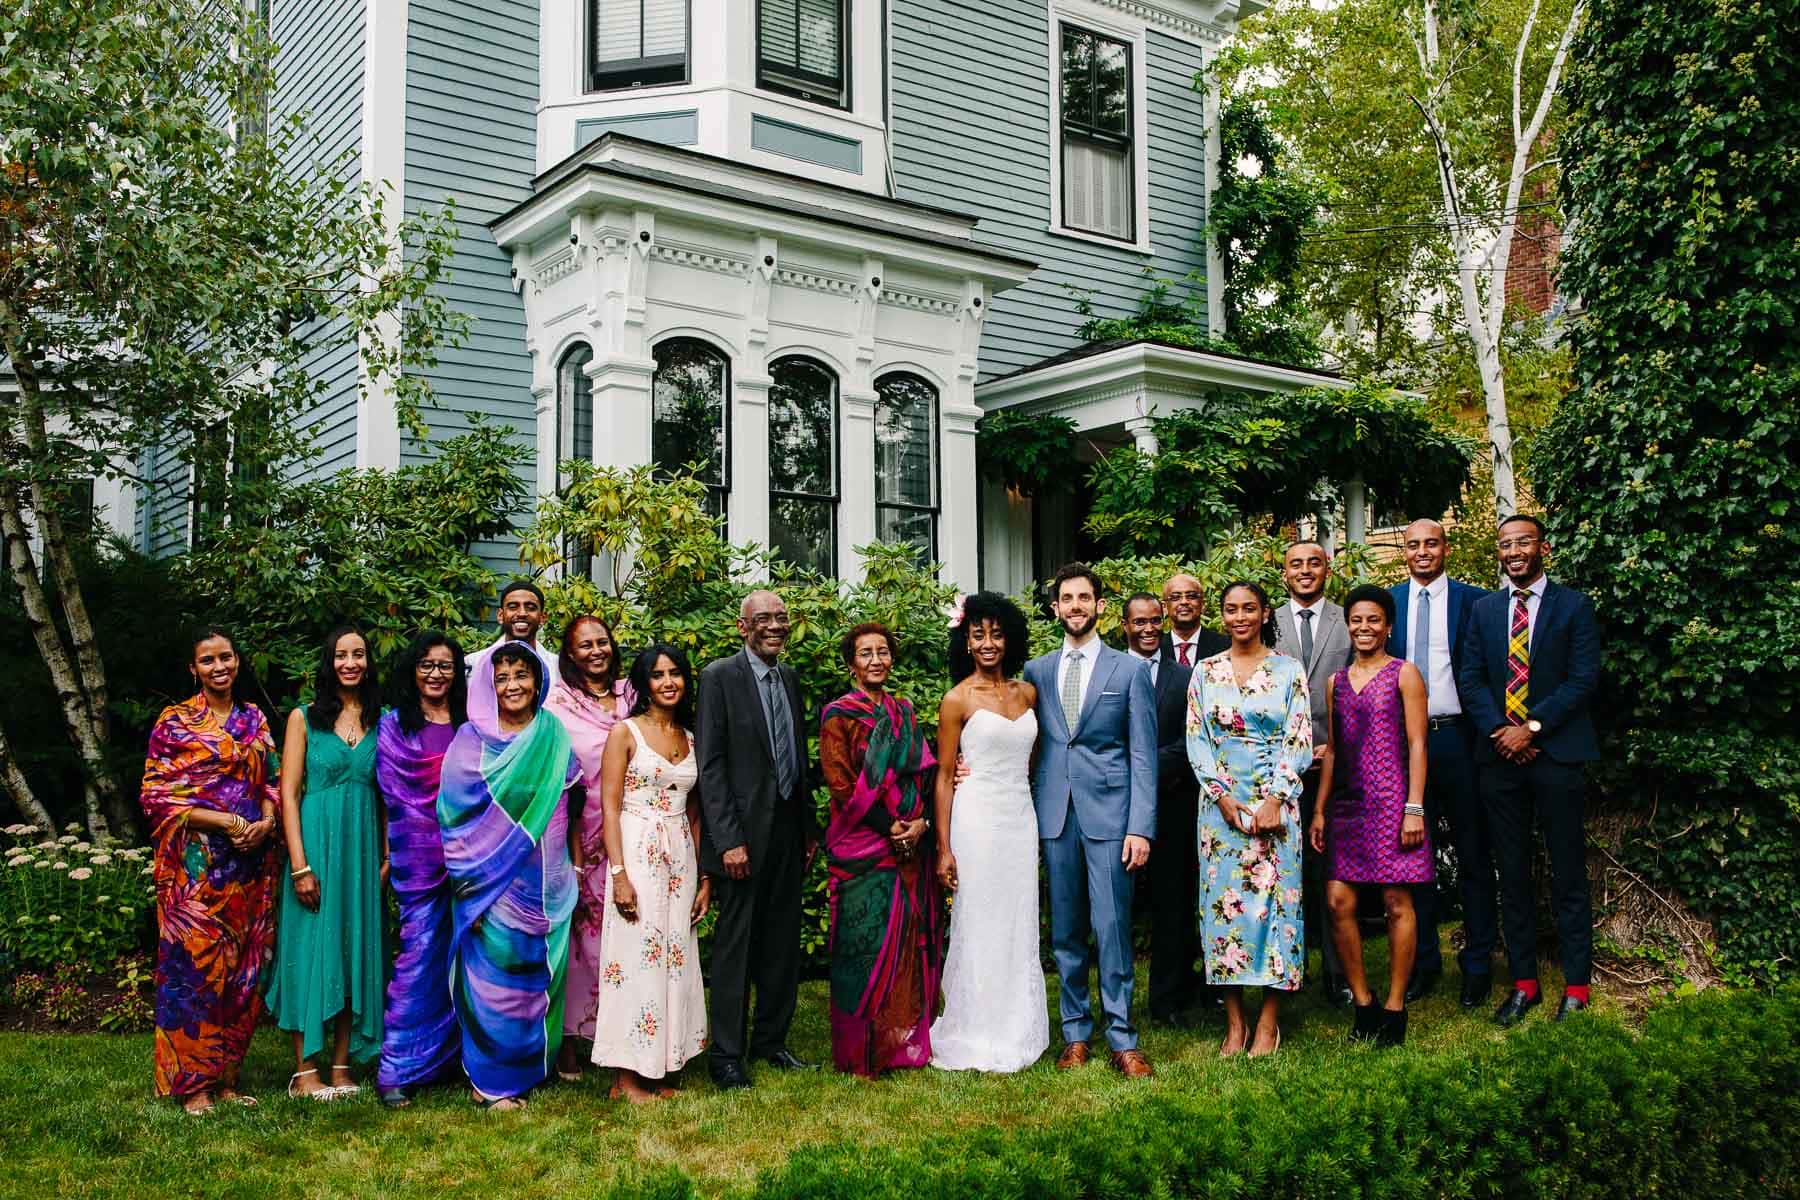 family portraits at a Cambridge backyard wedding | Kelly Benvenuto Photography